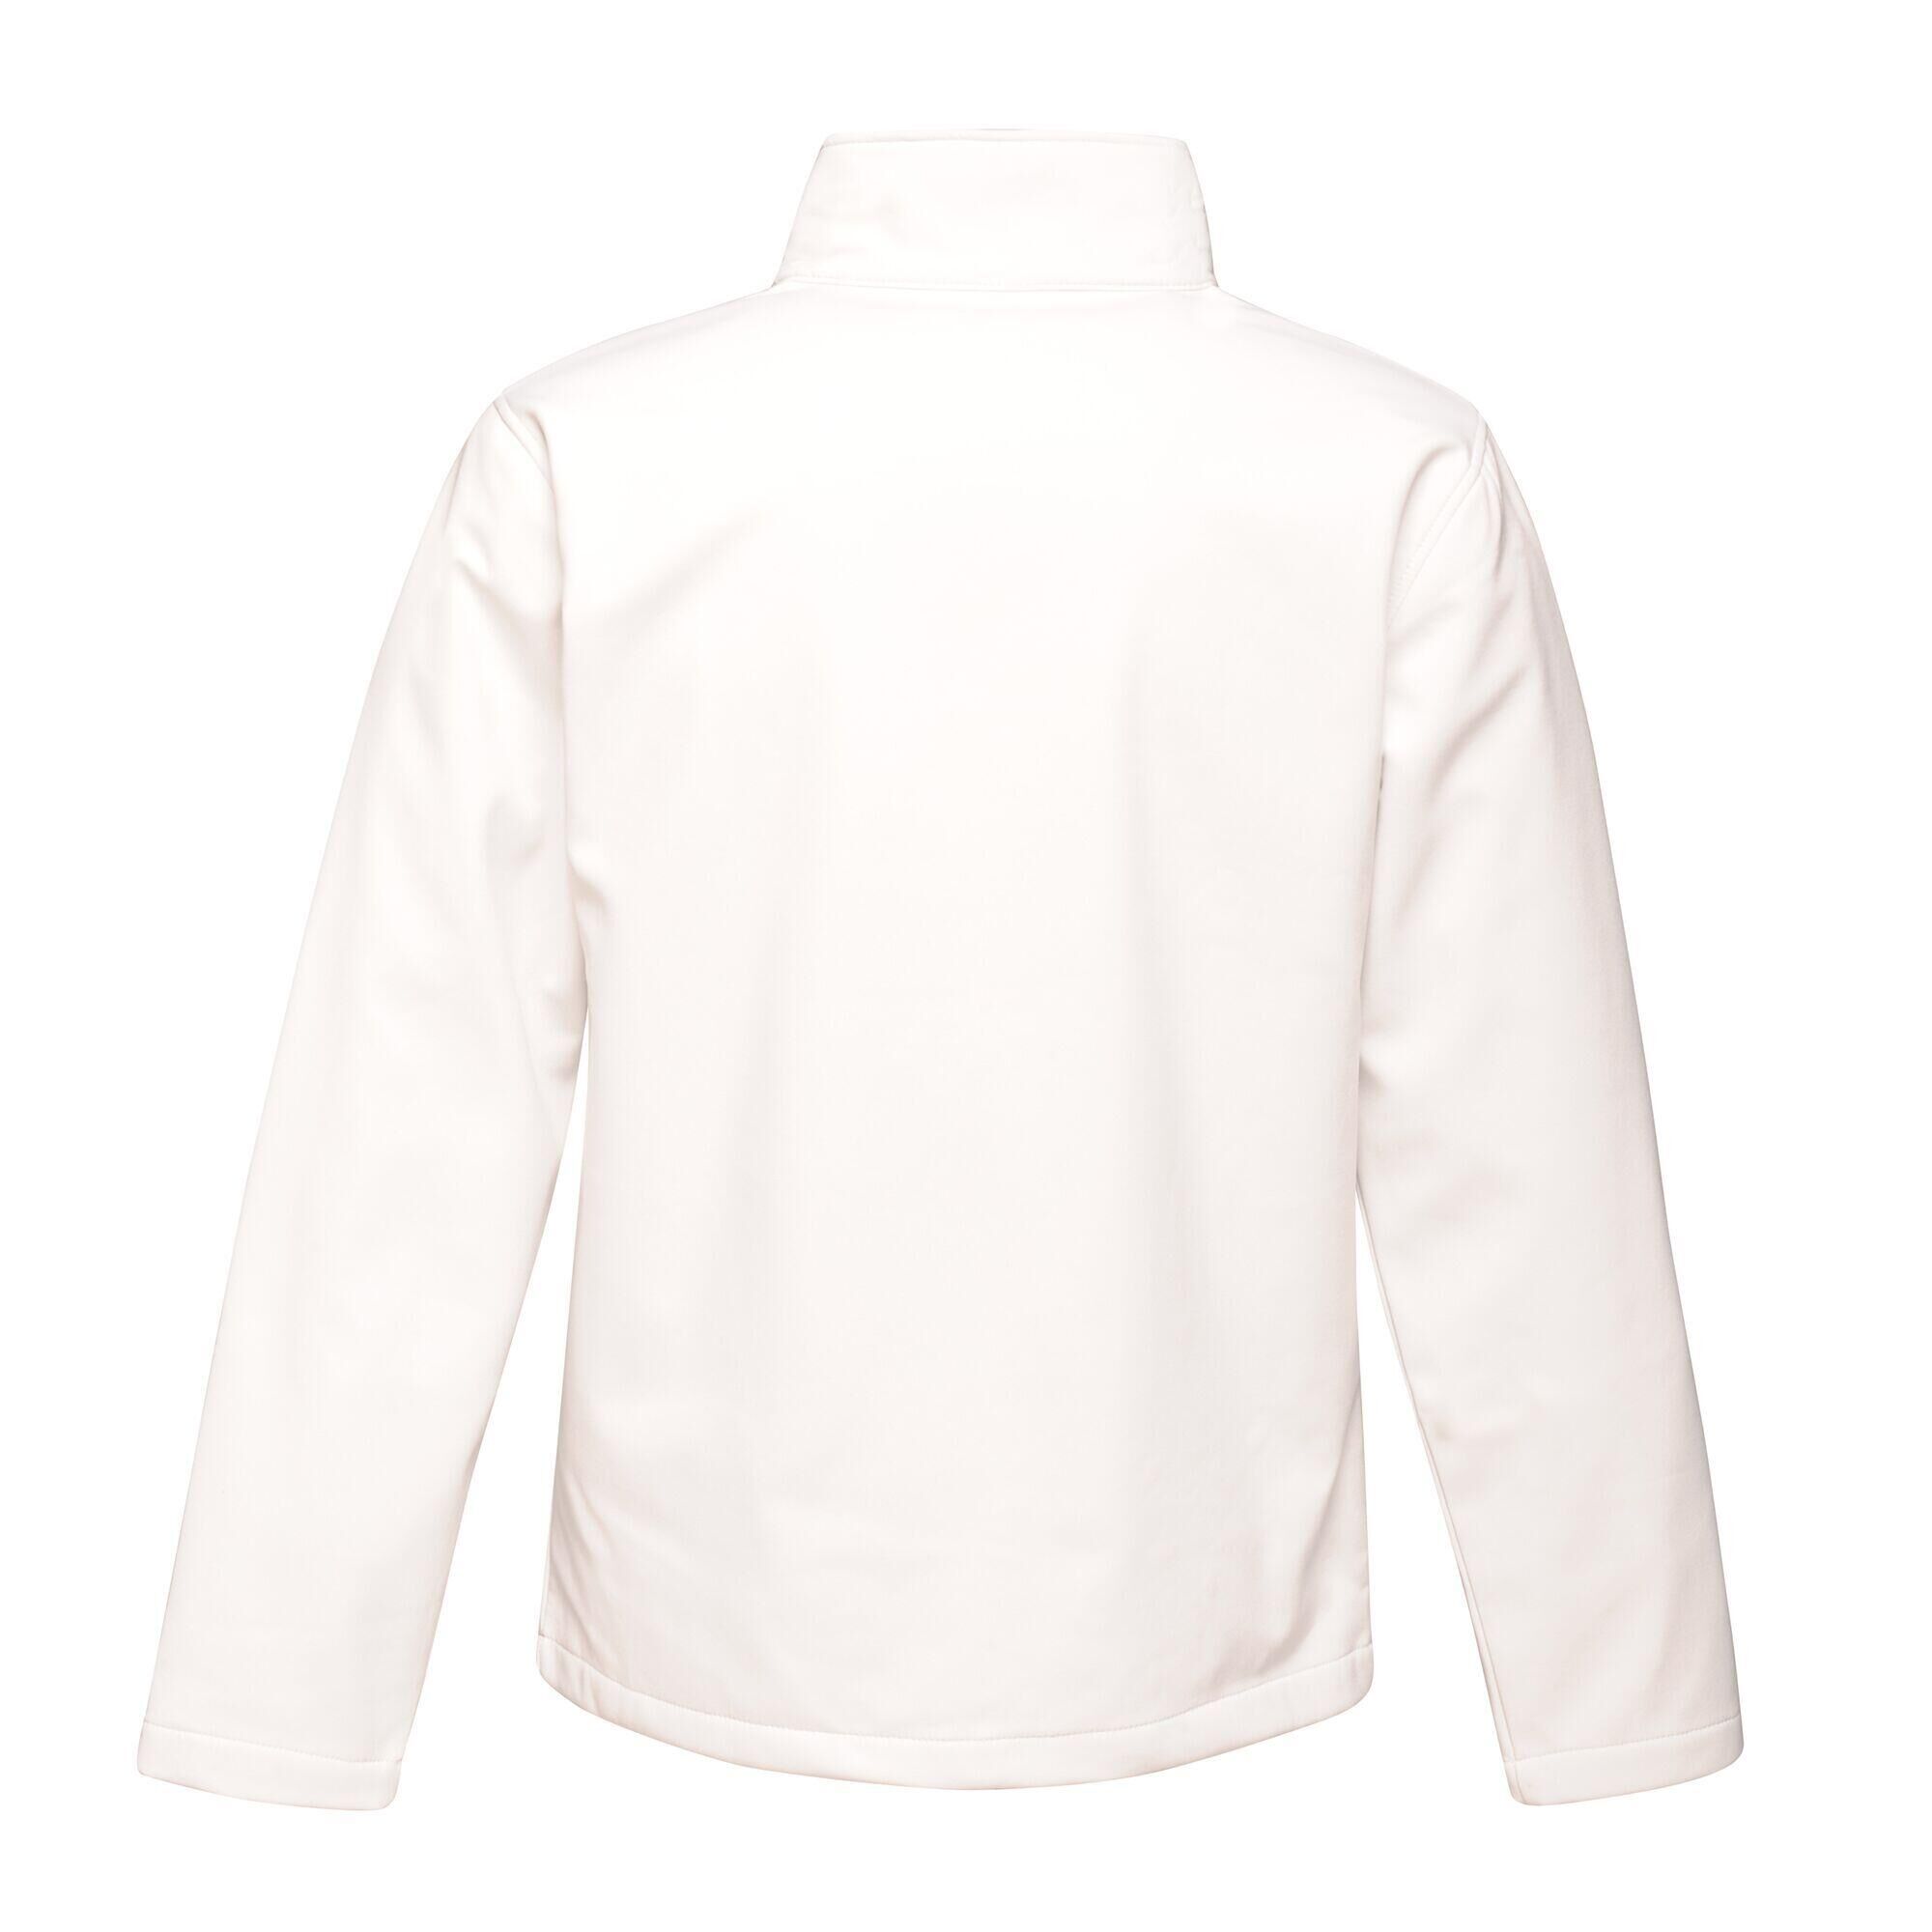 REGATTA Standout Mens Ablaze Printable Softshell Jacket (White/Light Steel)